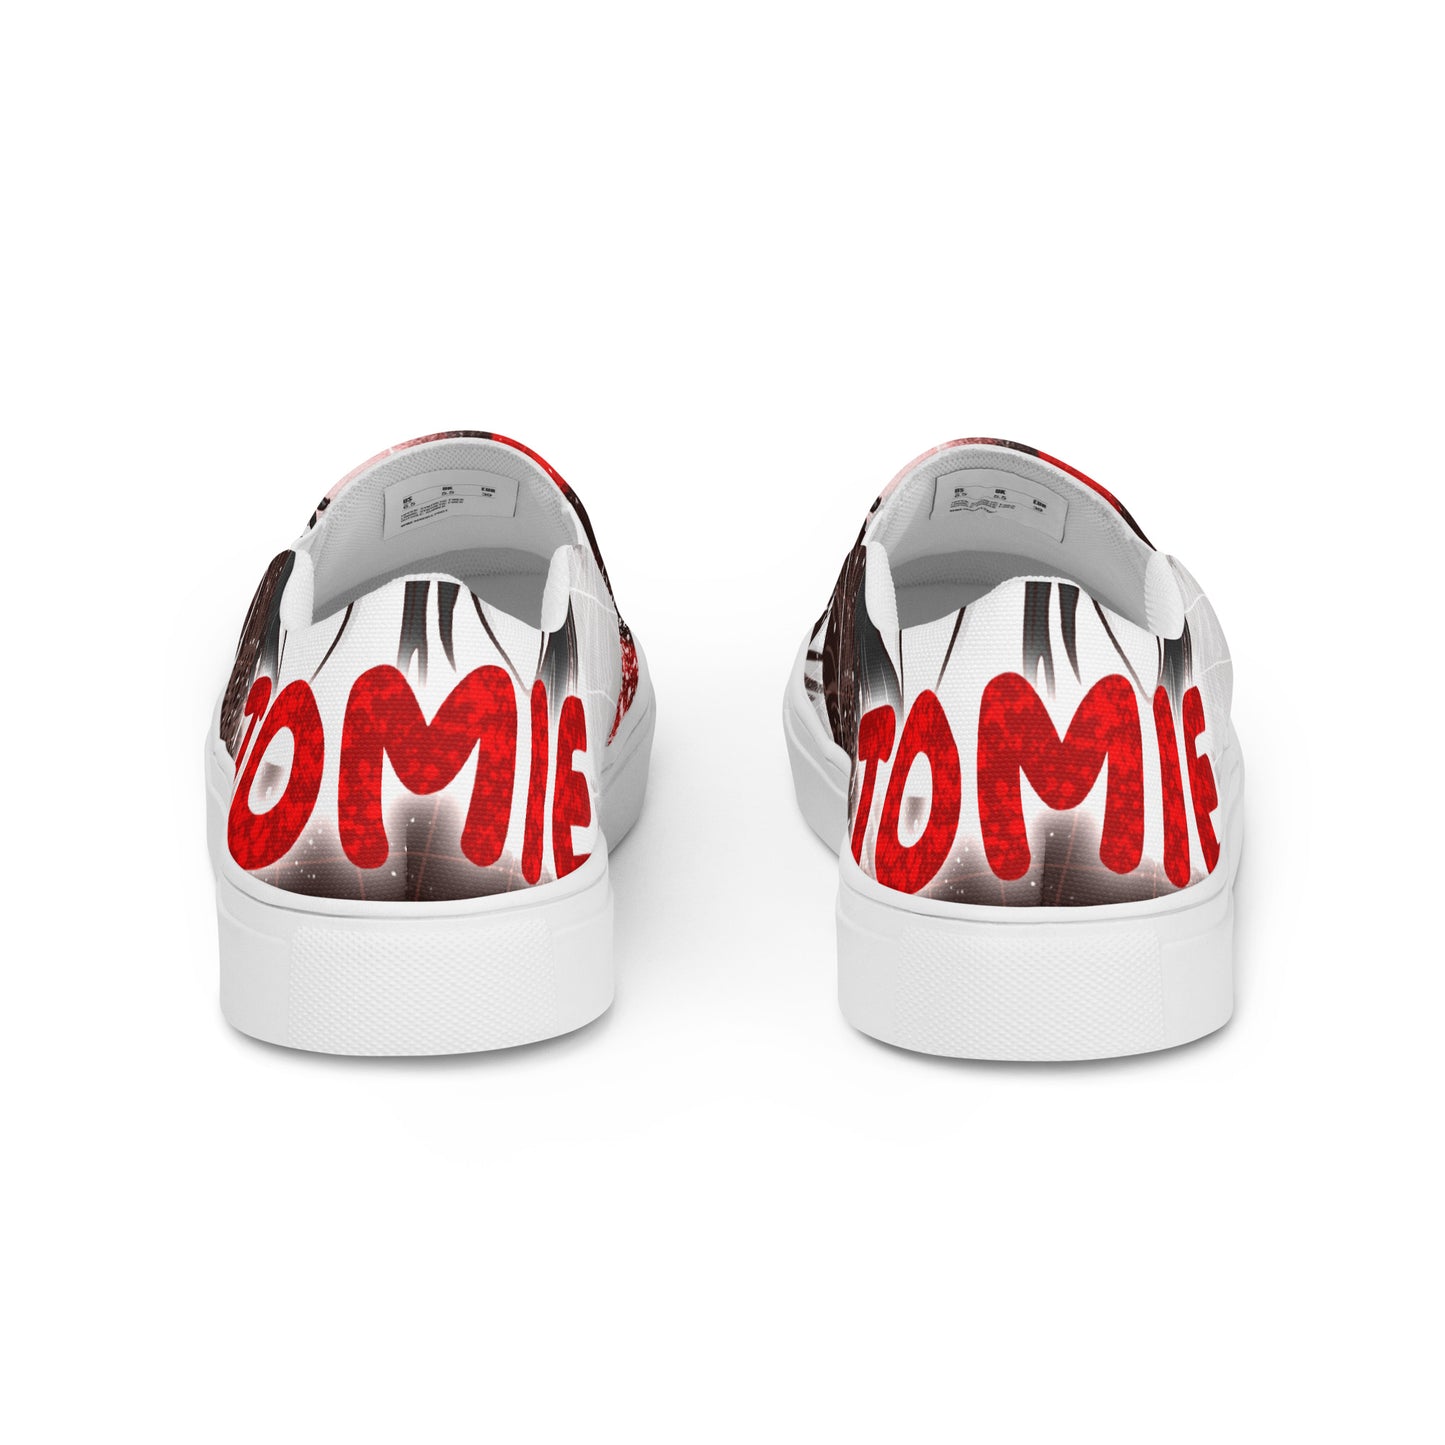 Tomie Men’s slip-on canvas shoes